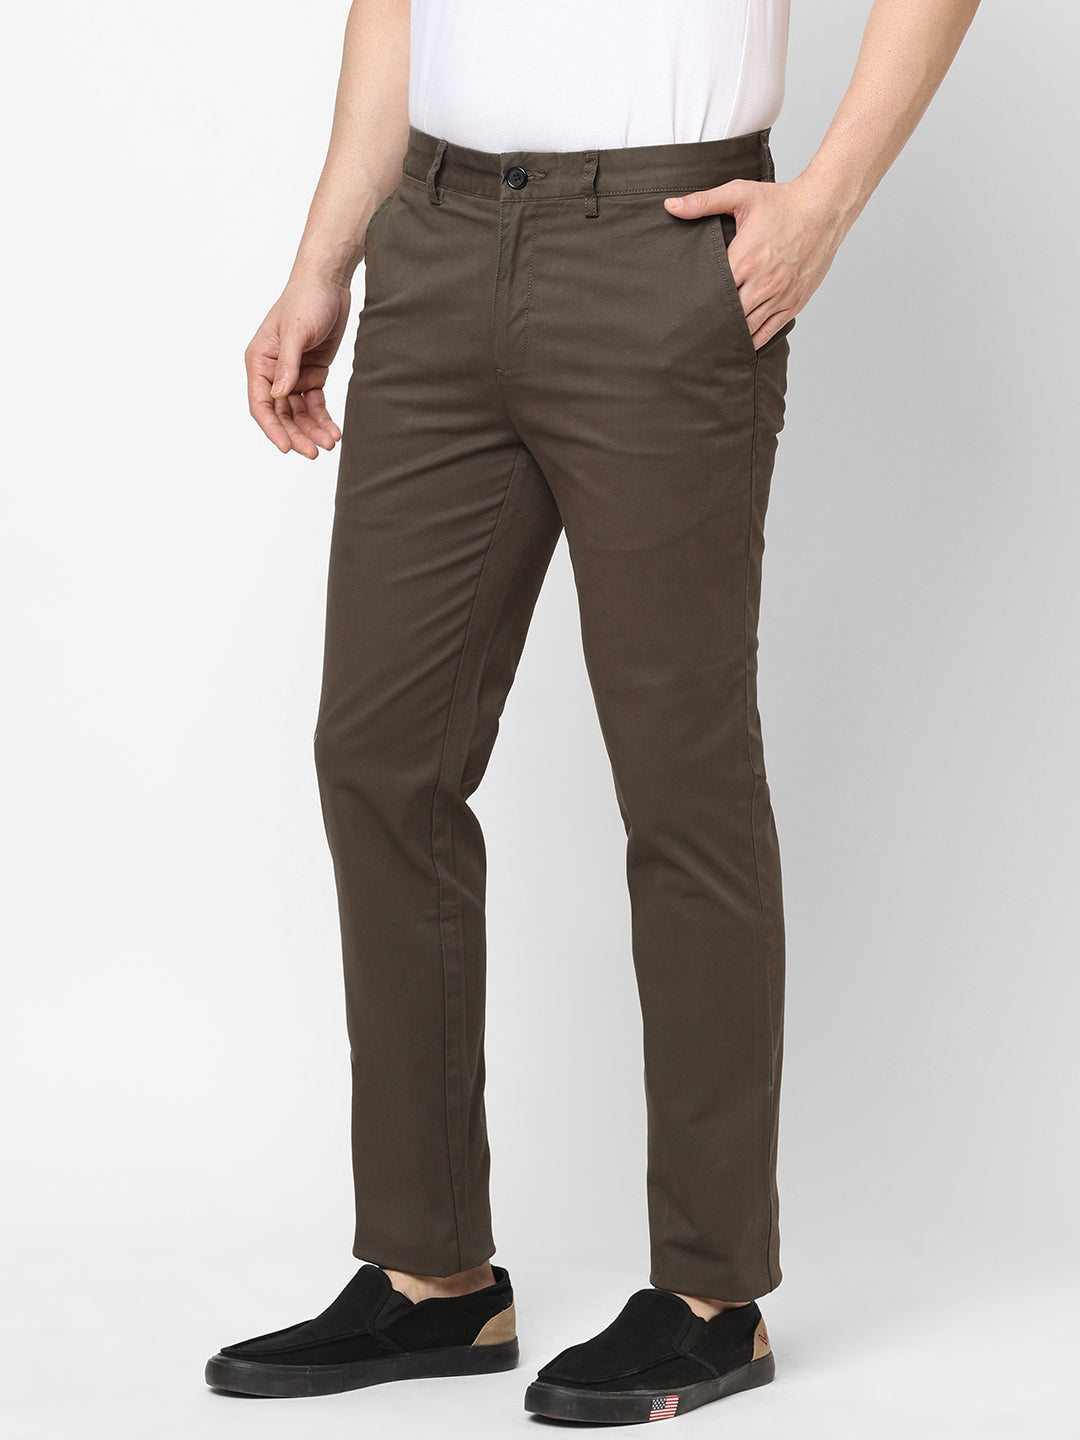 mens pants khaki fashion men's pants casual cotton man pants supply fi